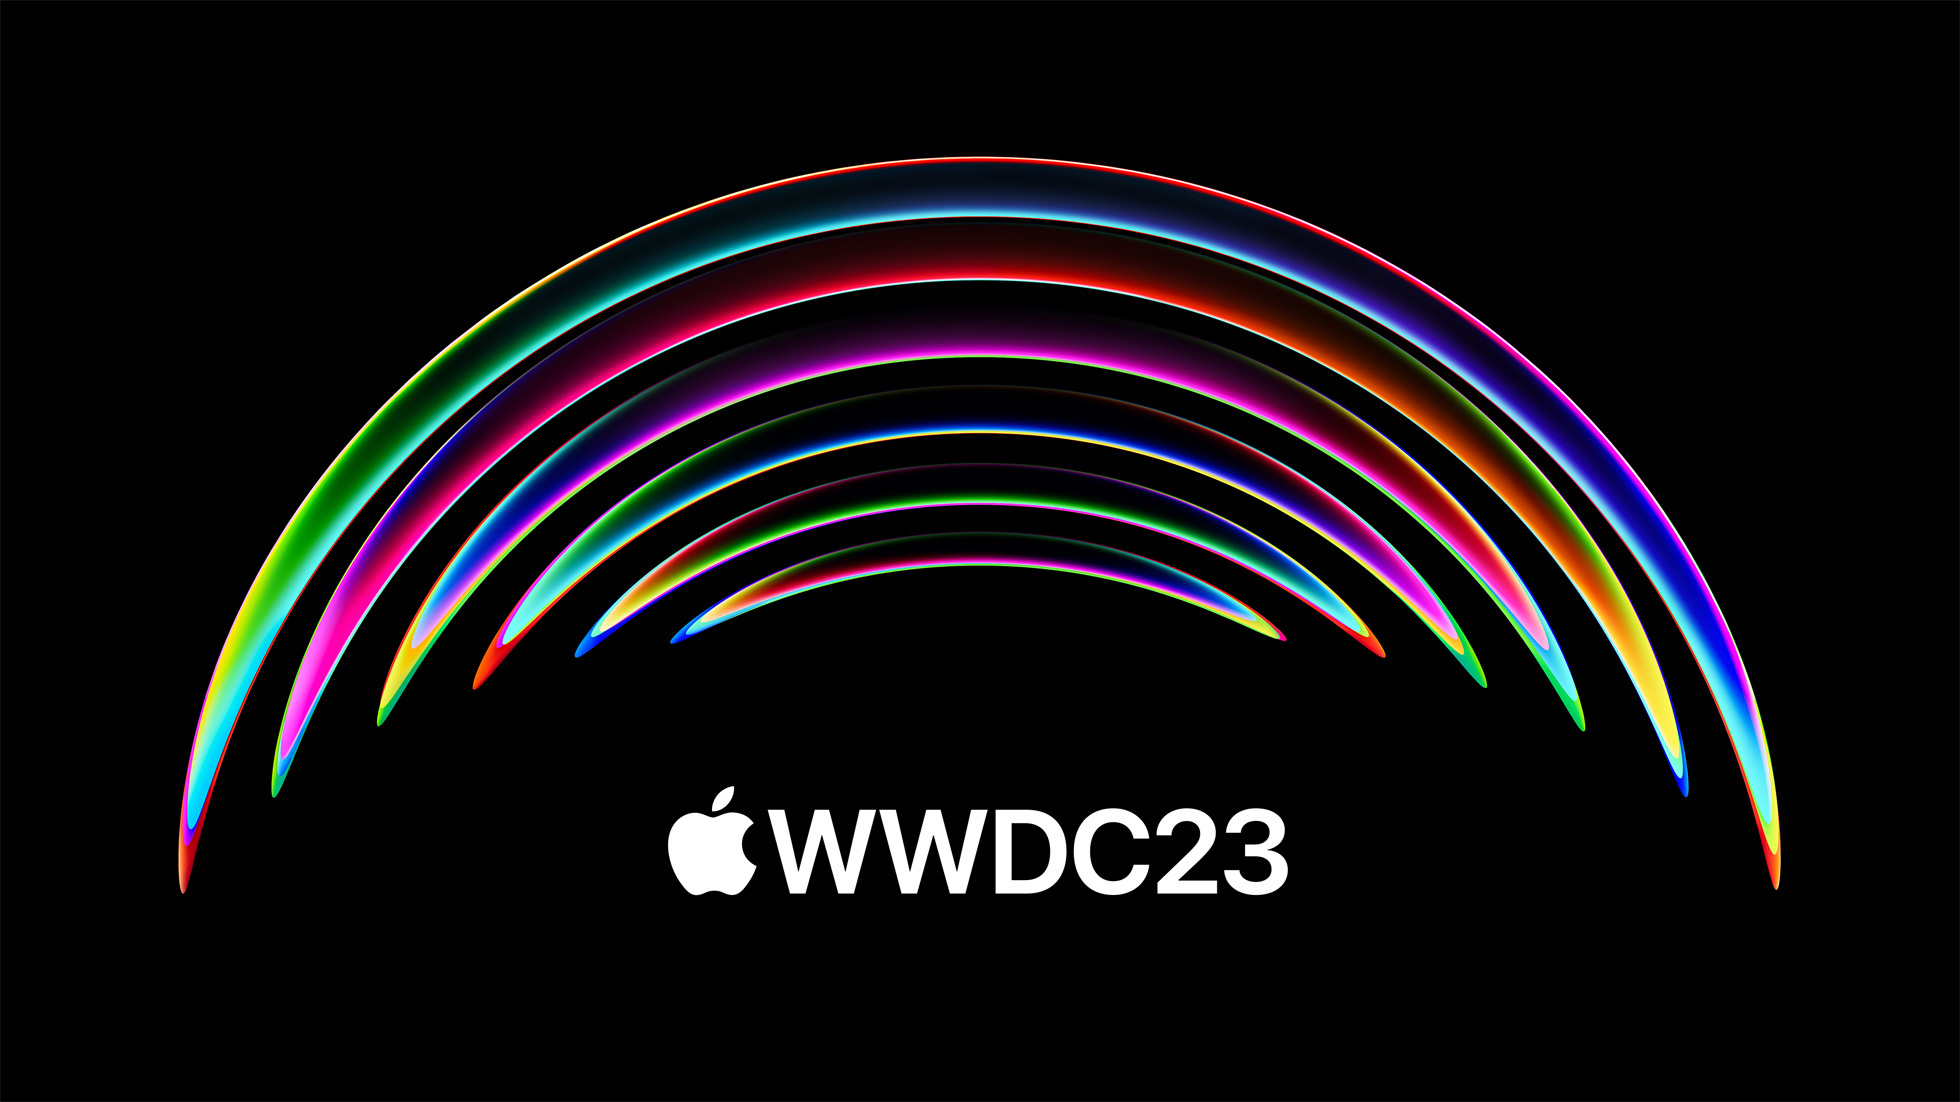 Apple 全球開發者大會 WWDC 23 預告 6/6 淩晨登場 將於 Apple Park 擧辦實躰特別活動